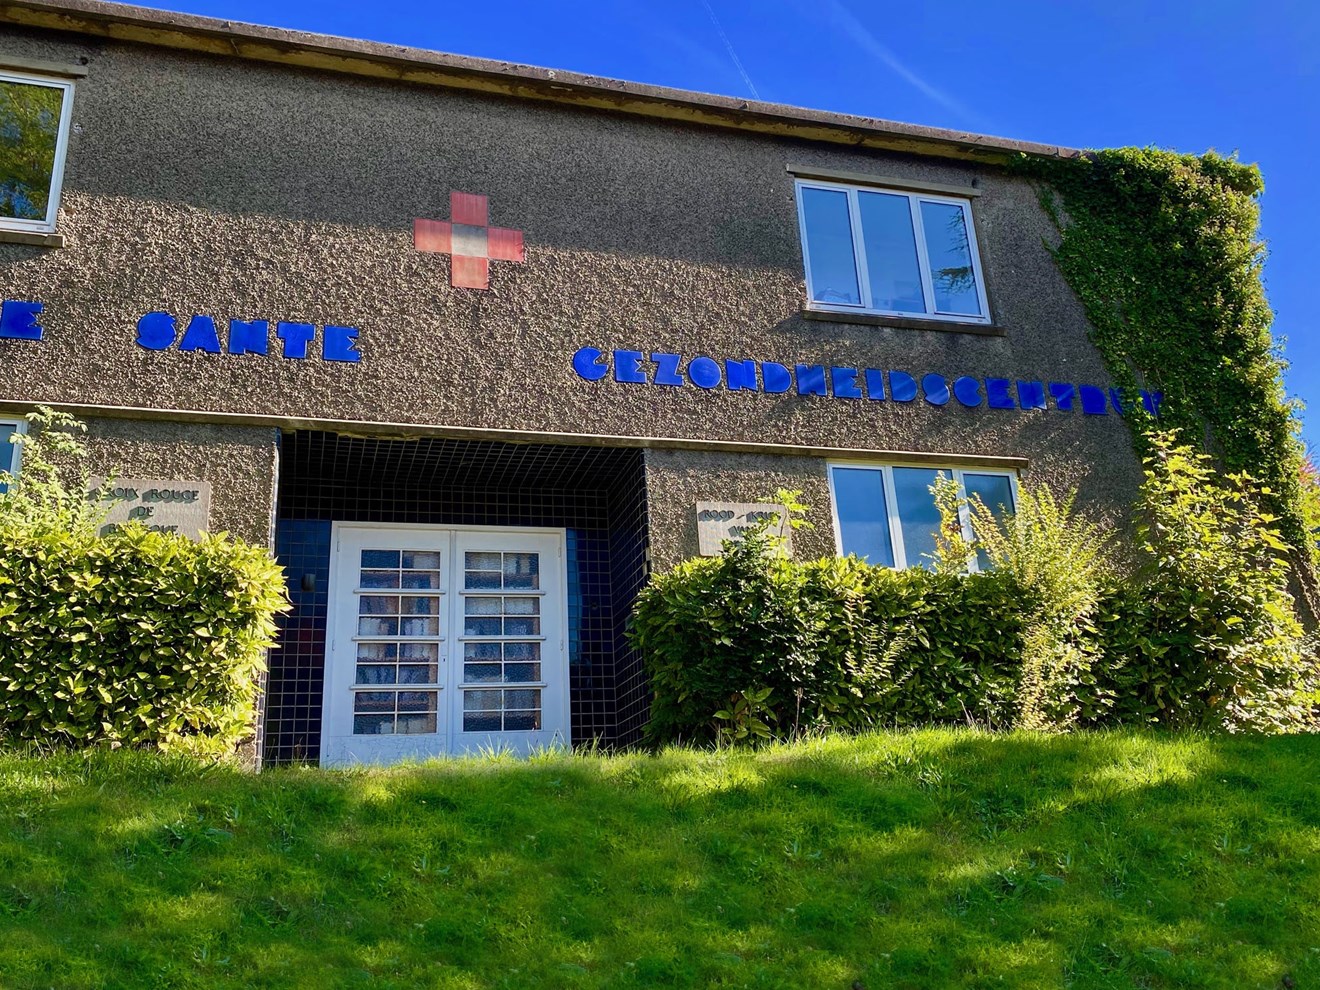 WAT13 Vink - Rode Kruis zorgcentrum